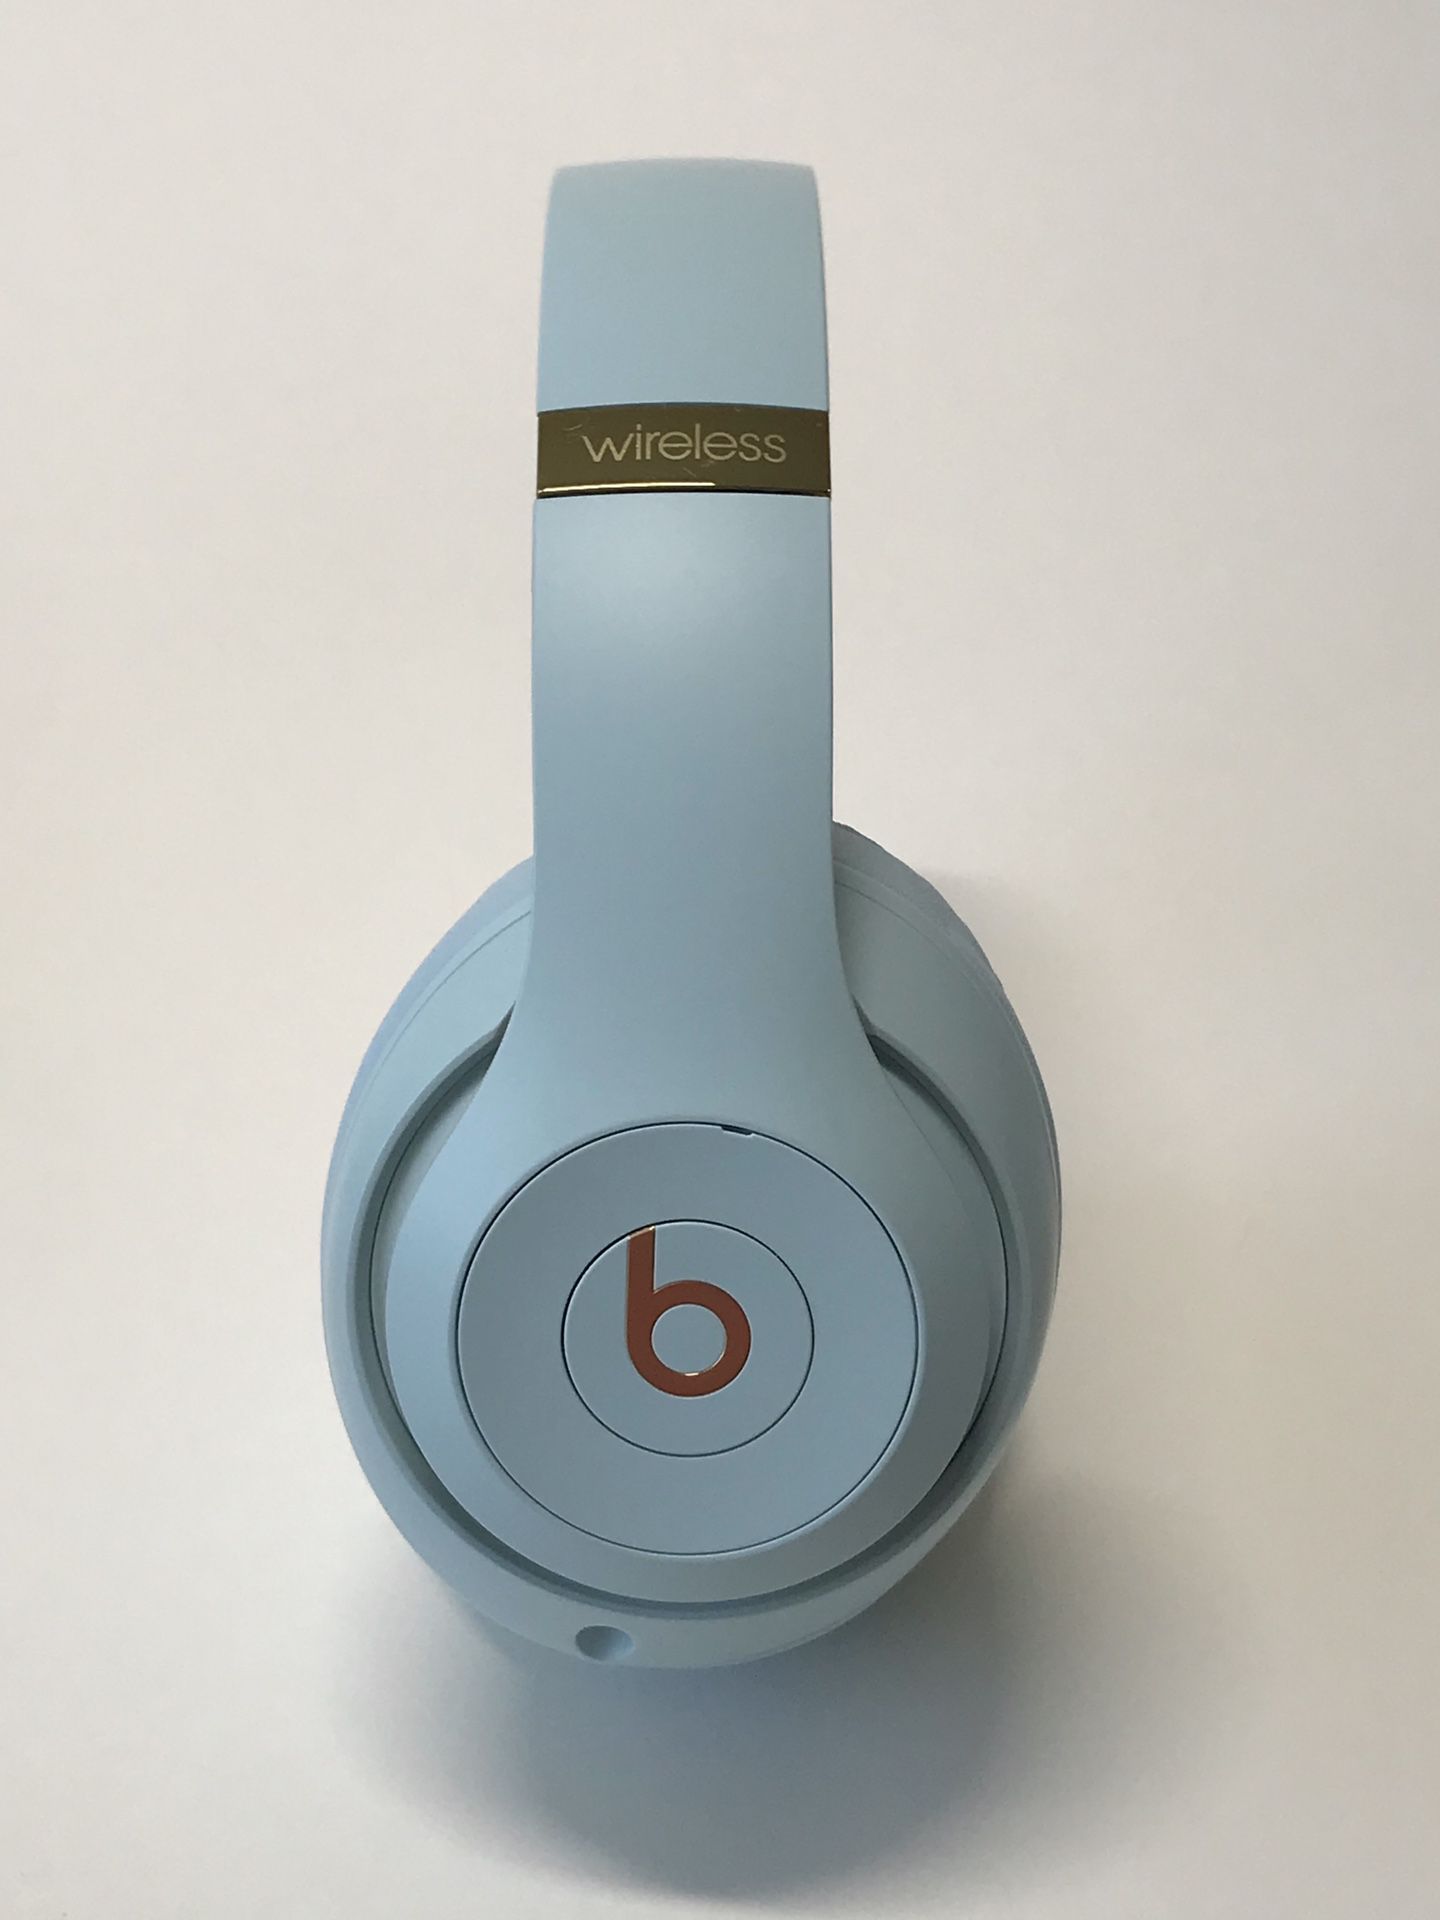 < LIKE NEW > BEATS STUDIO 3 Wireless Headphone Bluetooth - 22 Hours of Listening Time - Apple Chip - Noice Cancelation